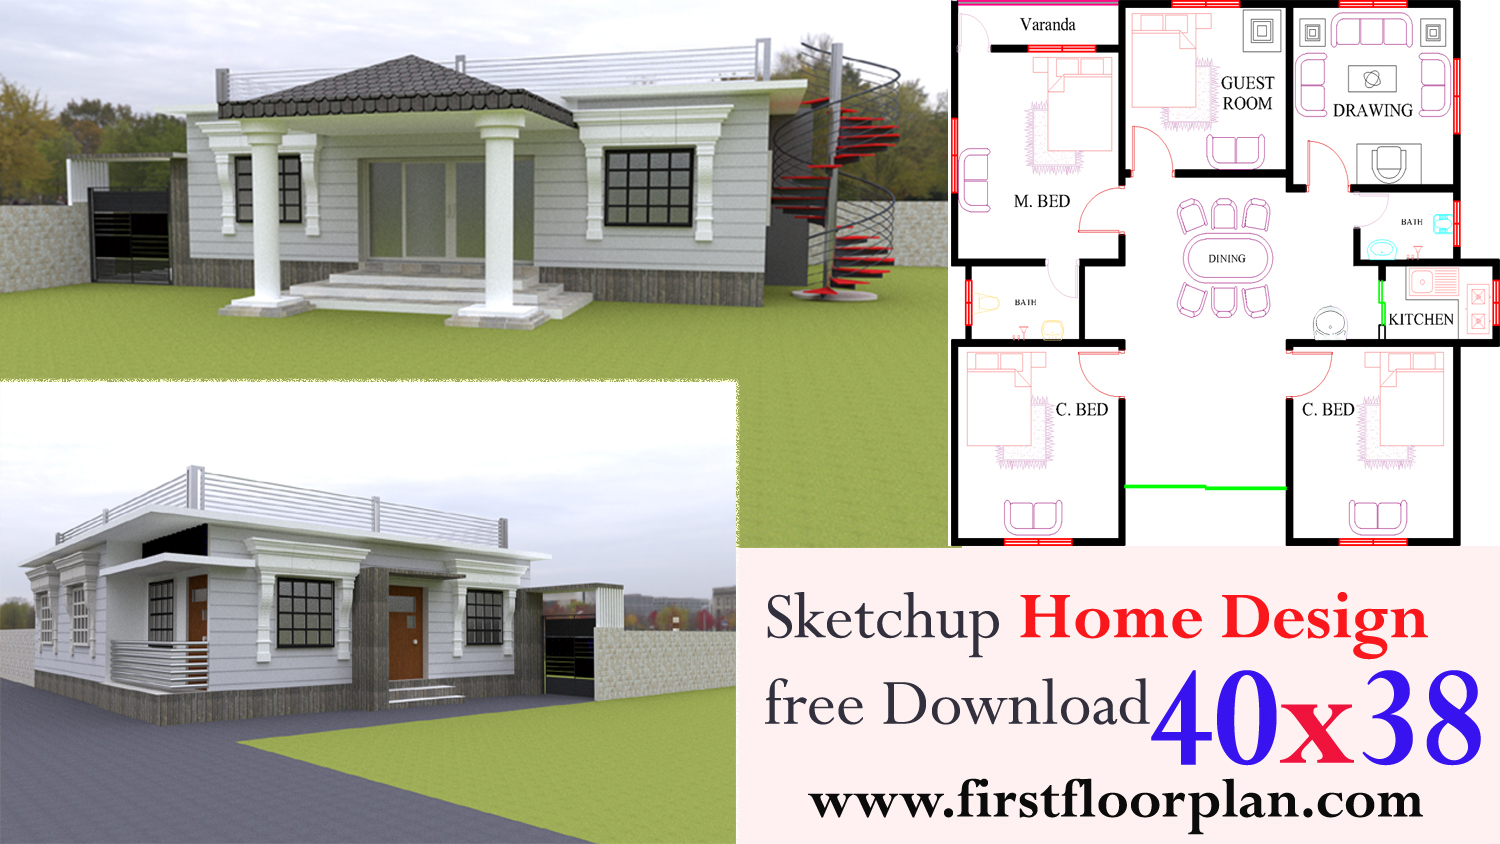 SketchUp elevation models free download | 40x38 Home Designs